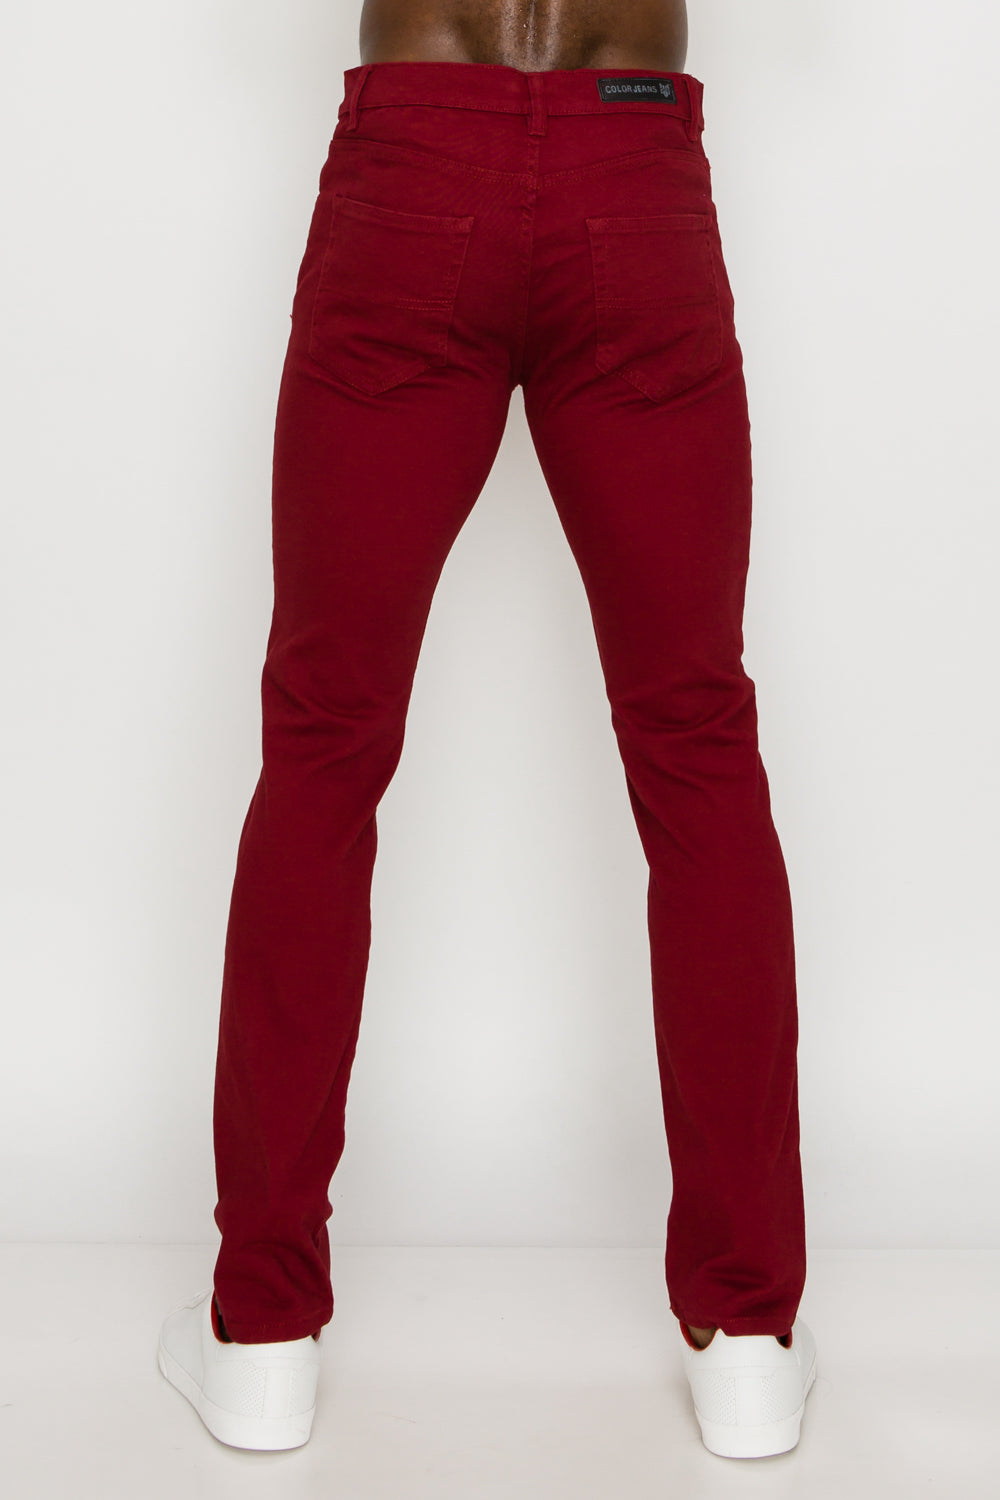 Zinovizo Men's Skinny-fit Red Wine Pants – zinovizo